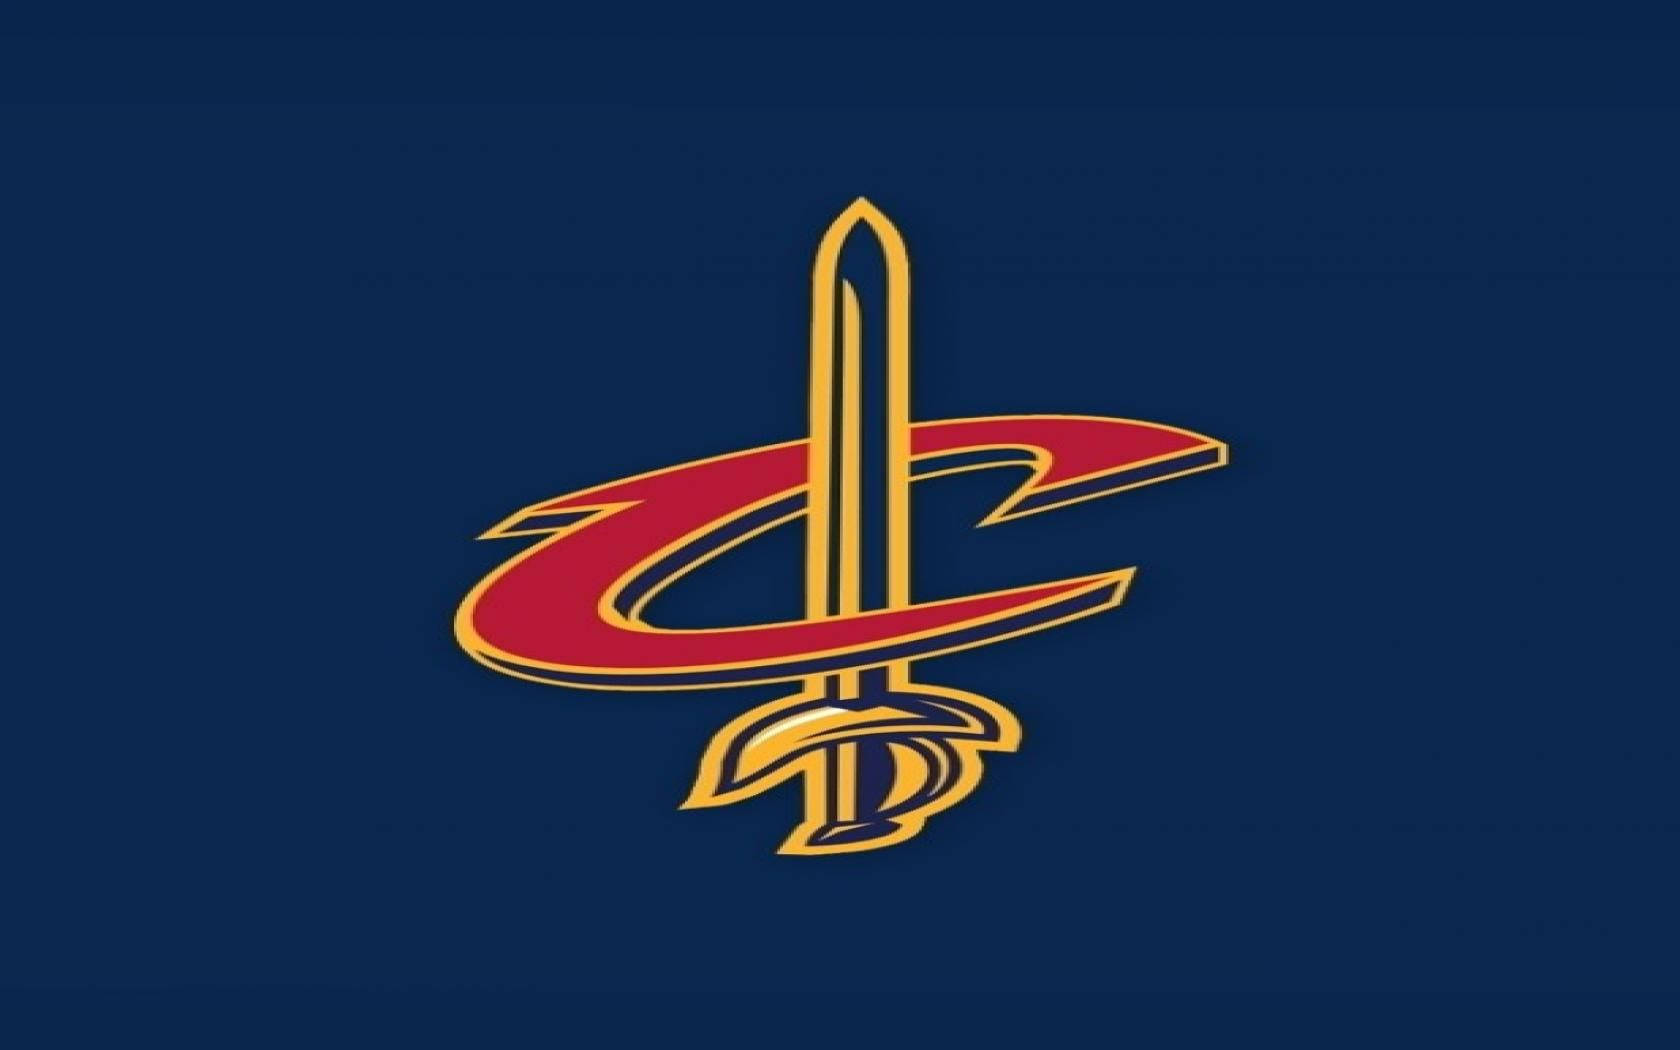 Cool Nba Cleveland Cavaliers Emblem Background